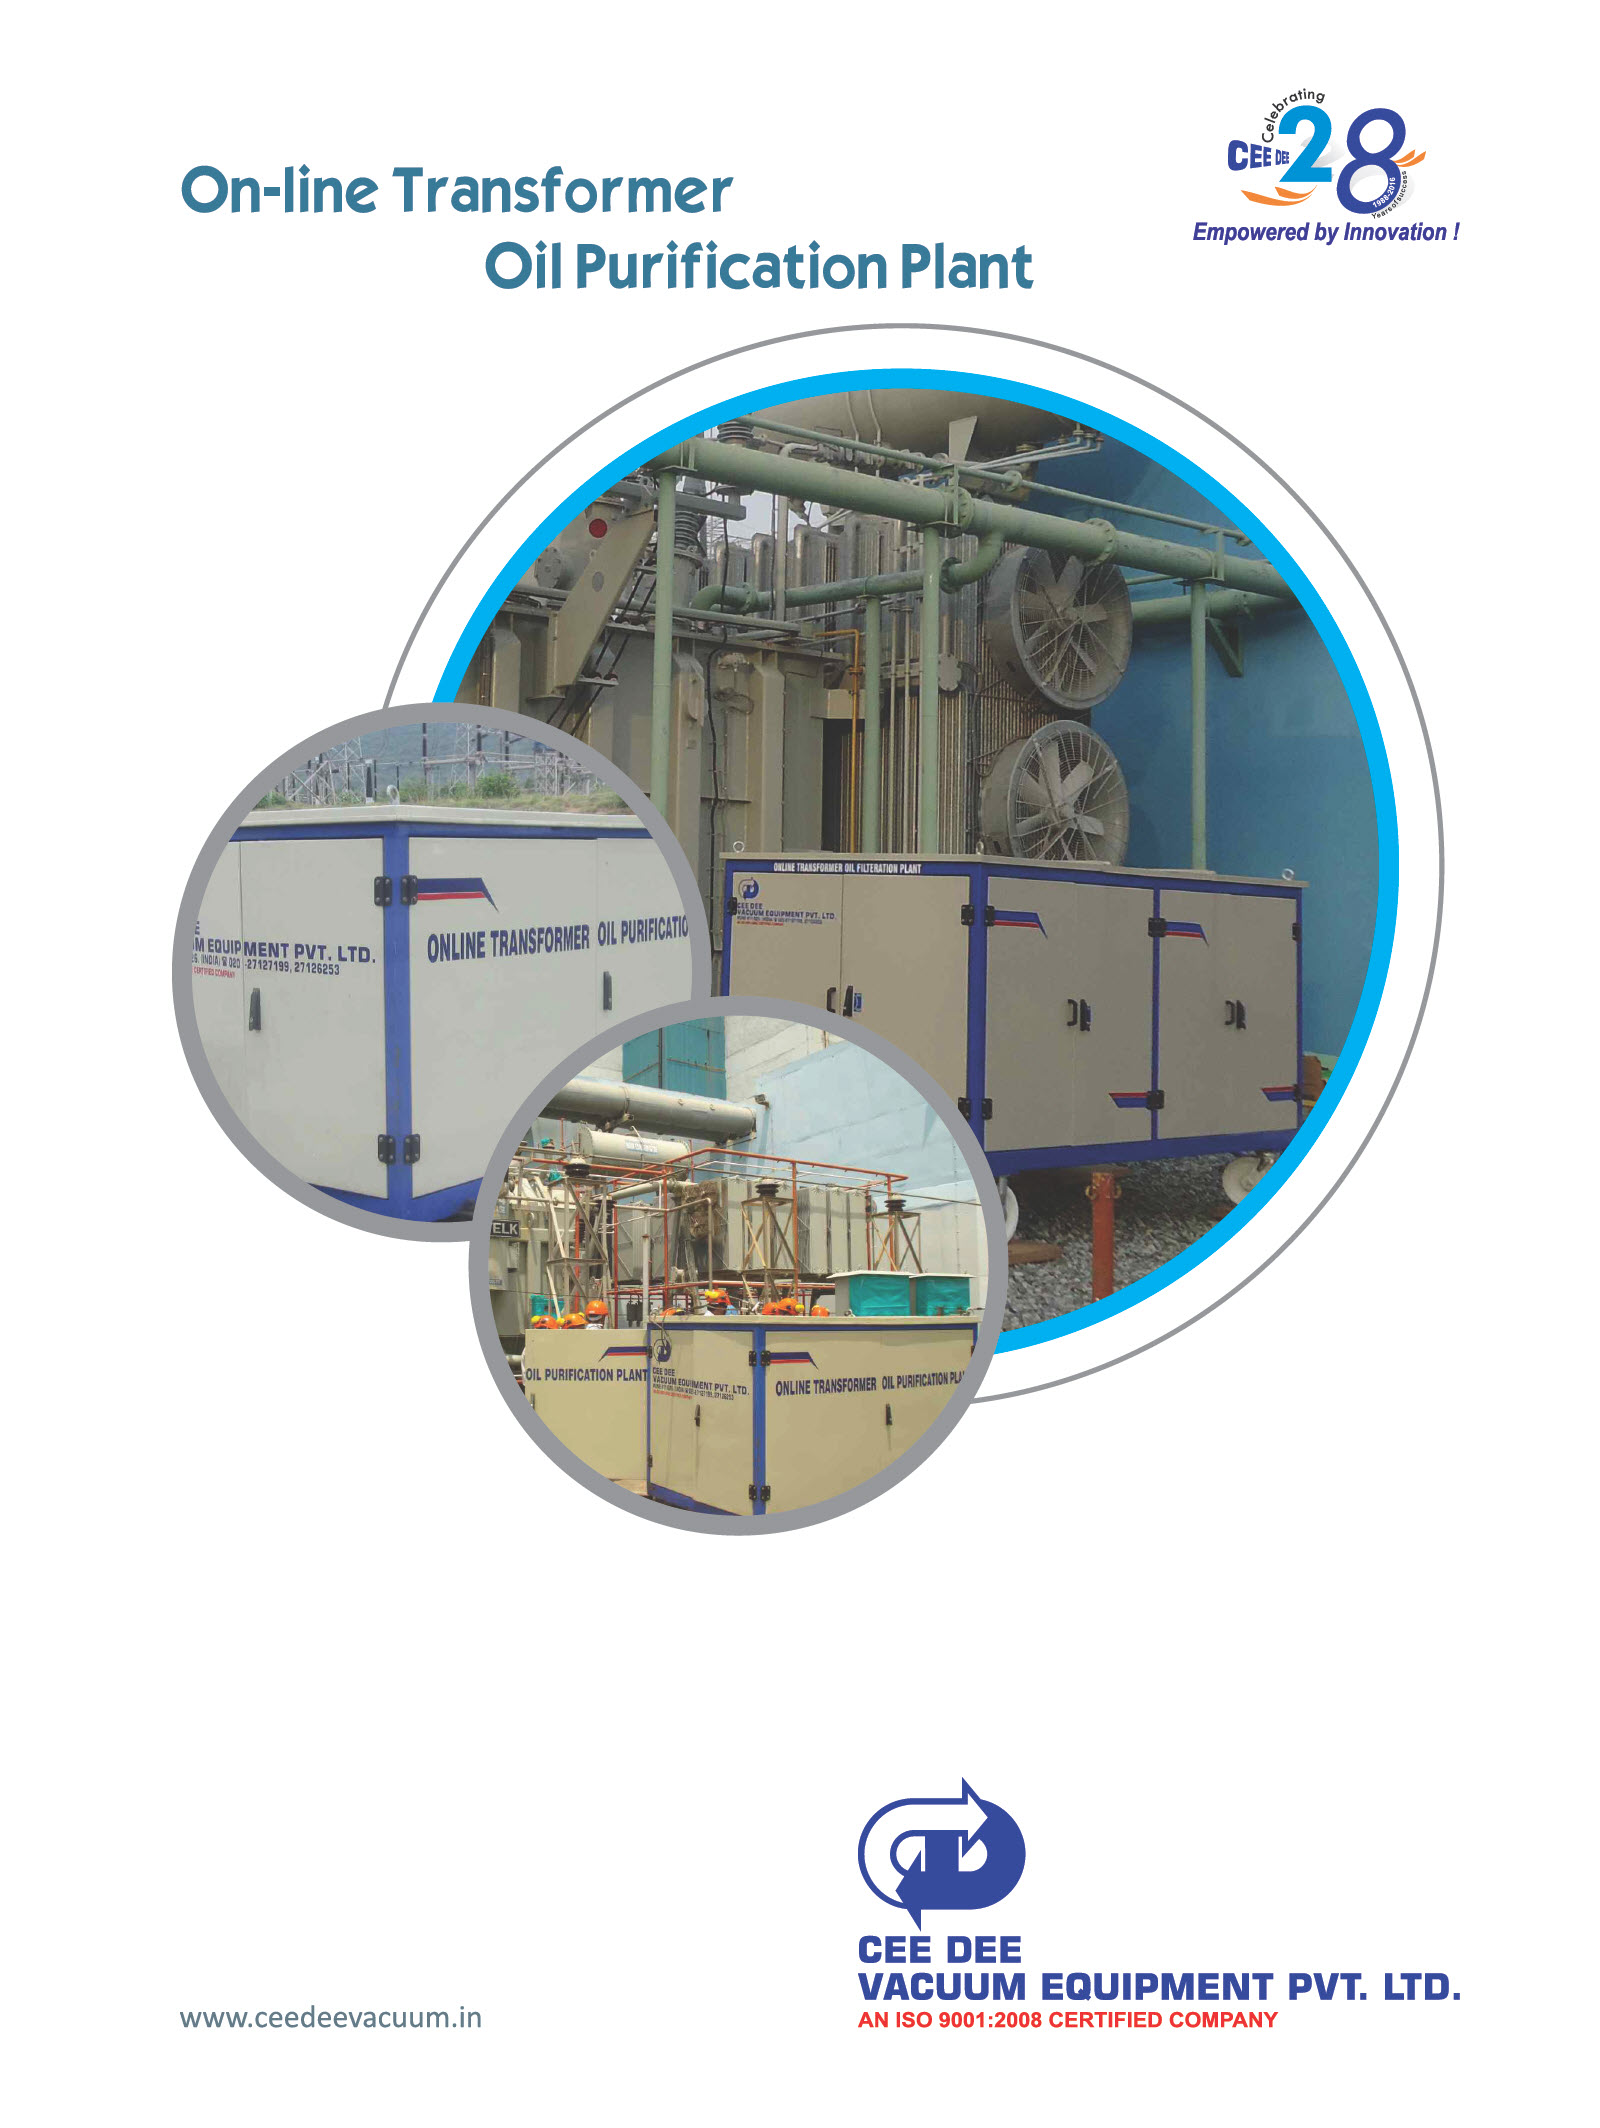 Online Transformer Oil Purification Plant